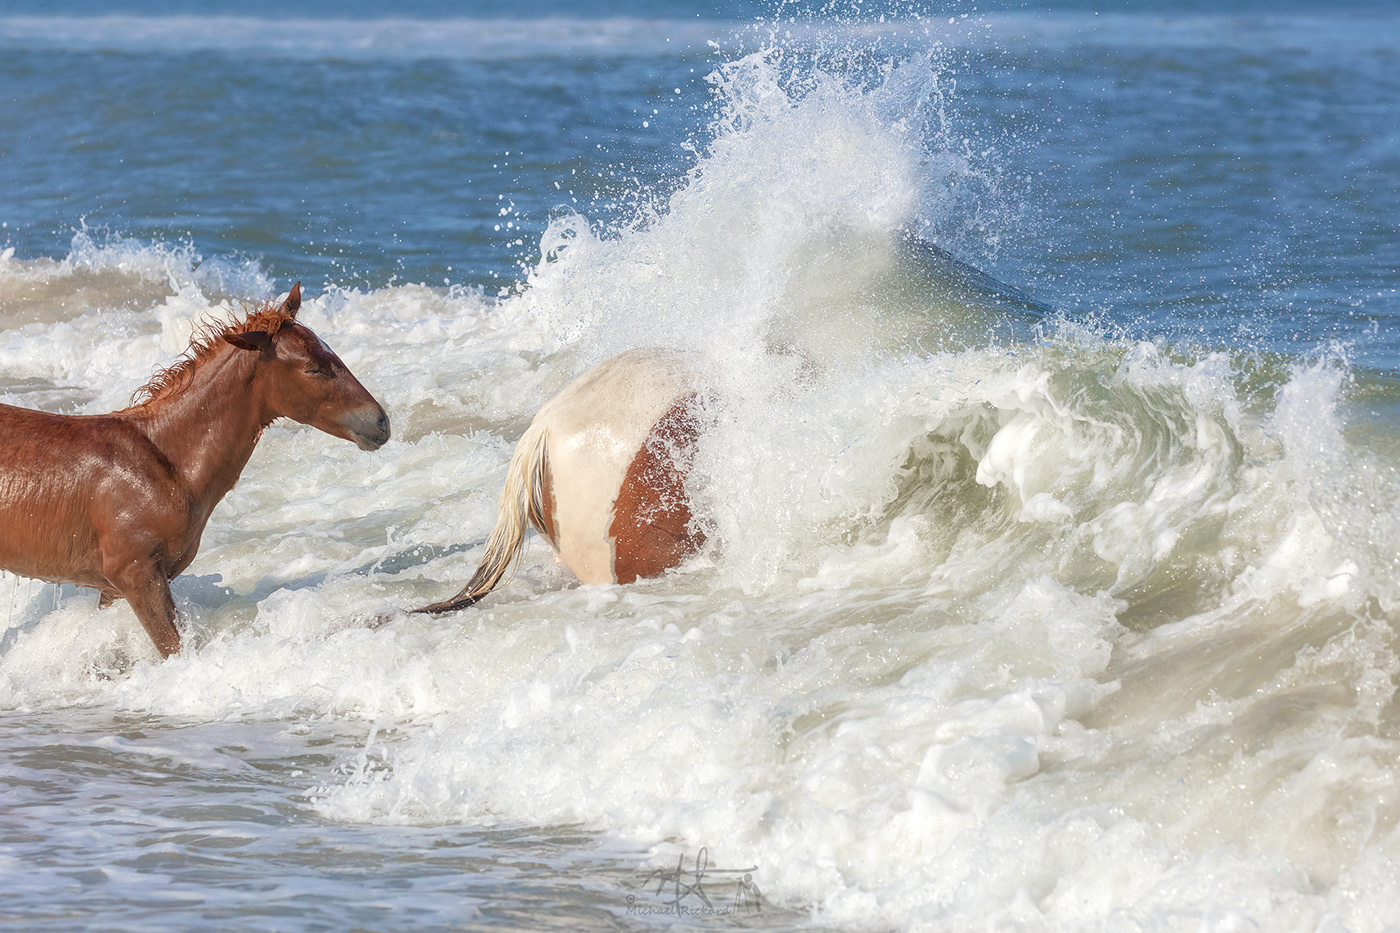 Assateague assateague island beach horses maryland national seashore Ocean seashore summer wild horses